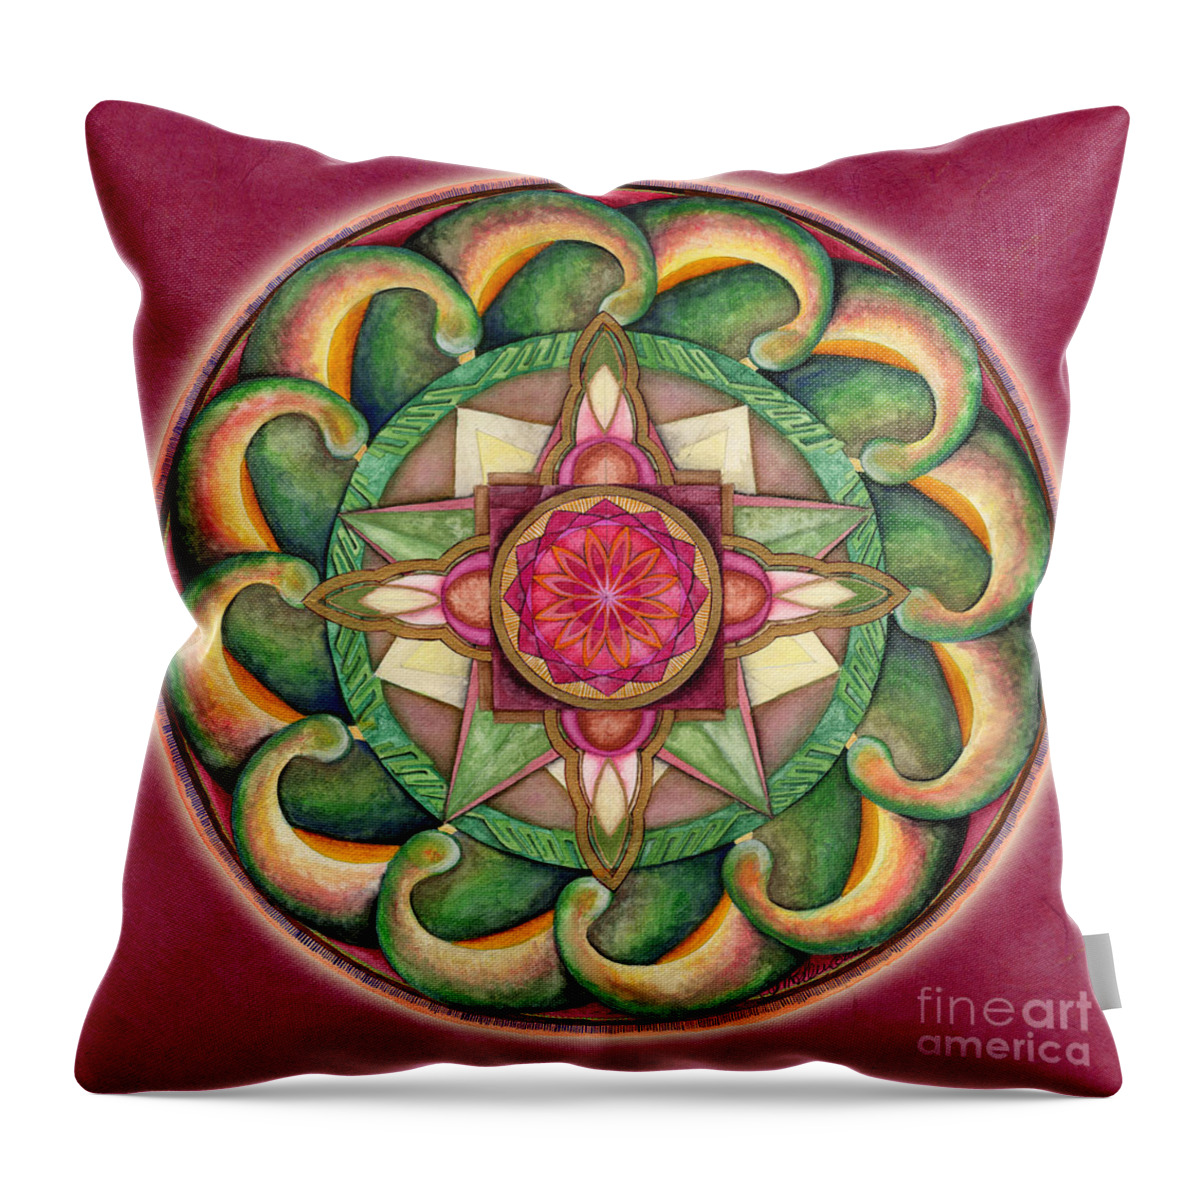 Mandala Art Throw Pillow featuring the painting Jewel of the Heart Mandala by Jo Thomas Blaine